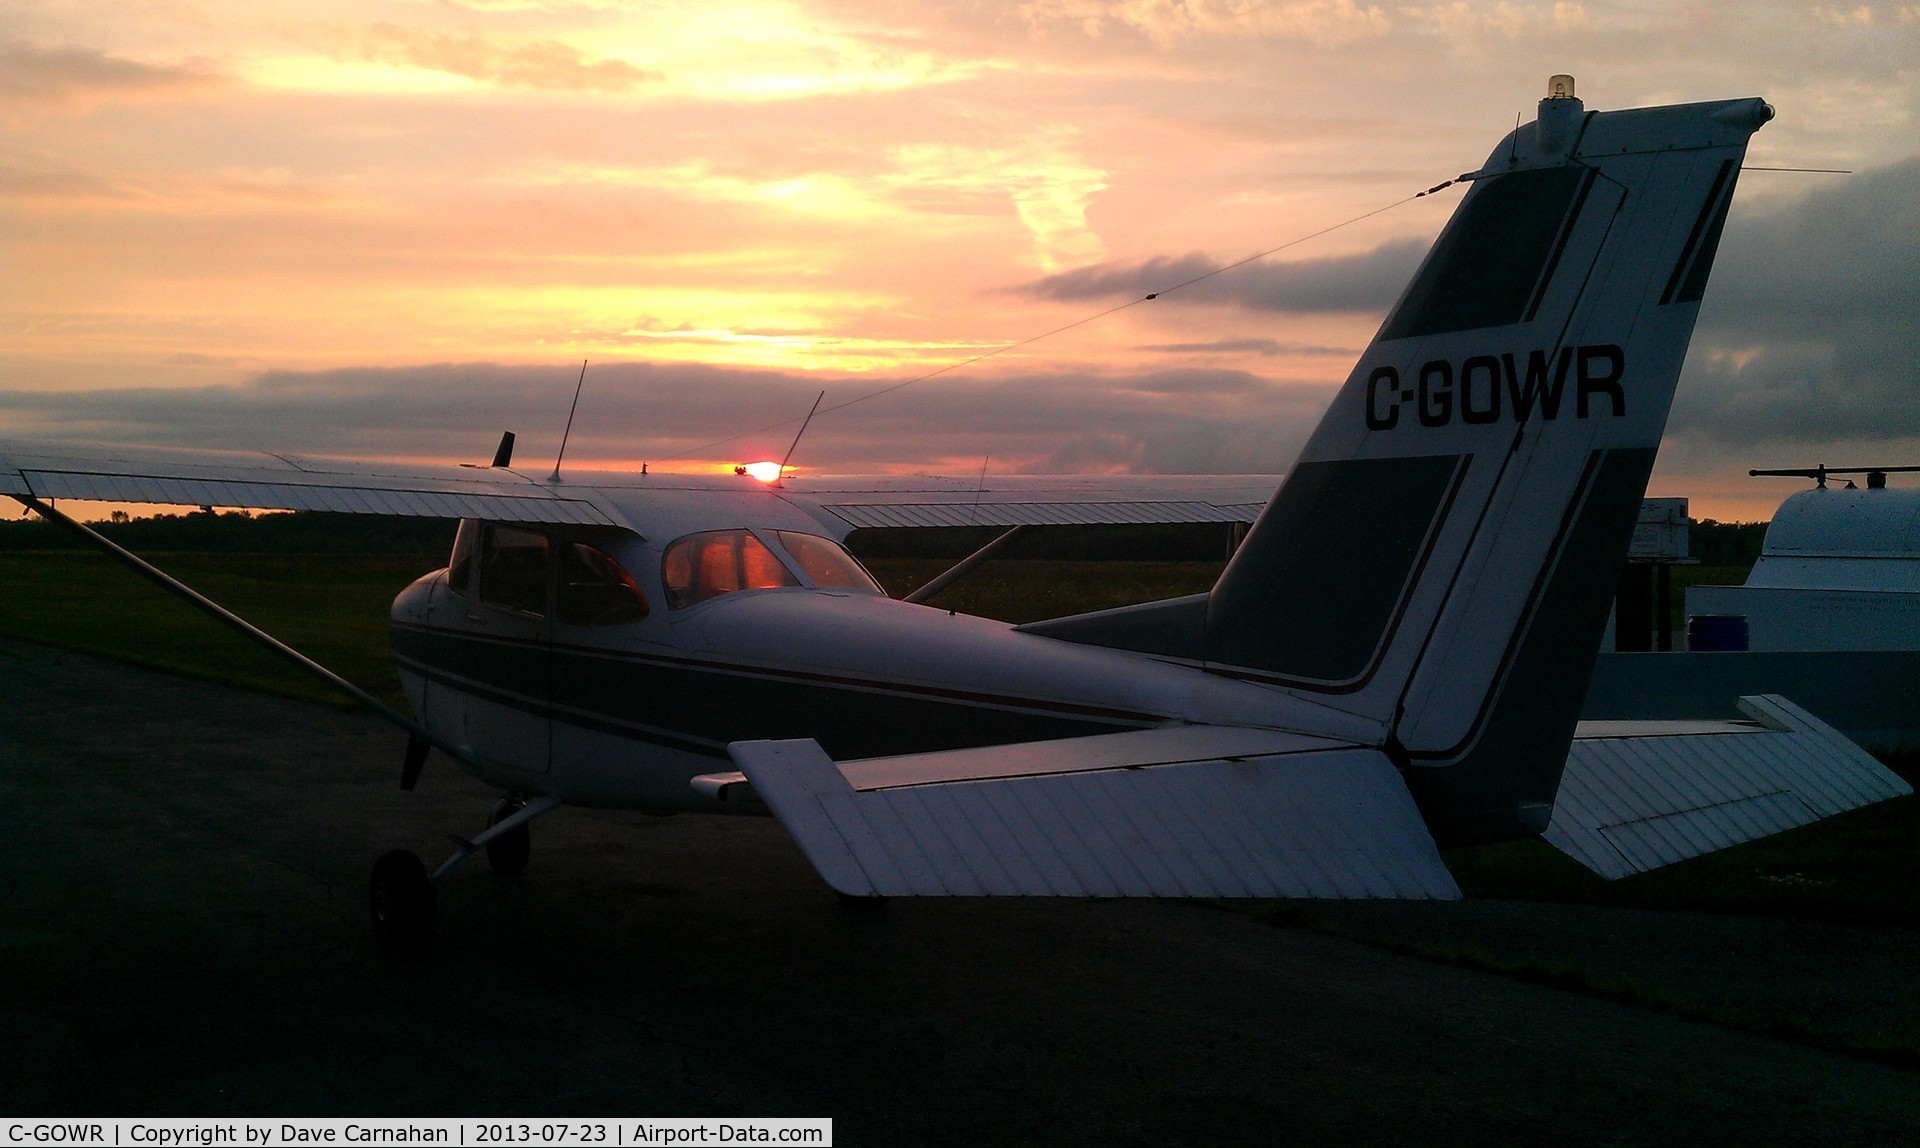 C-GOWR, 1966 Cessna 172G C/N 17253748, C-GOWR at sunset, Deseronto, Onatrio